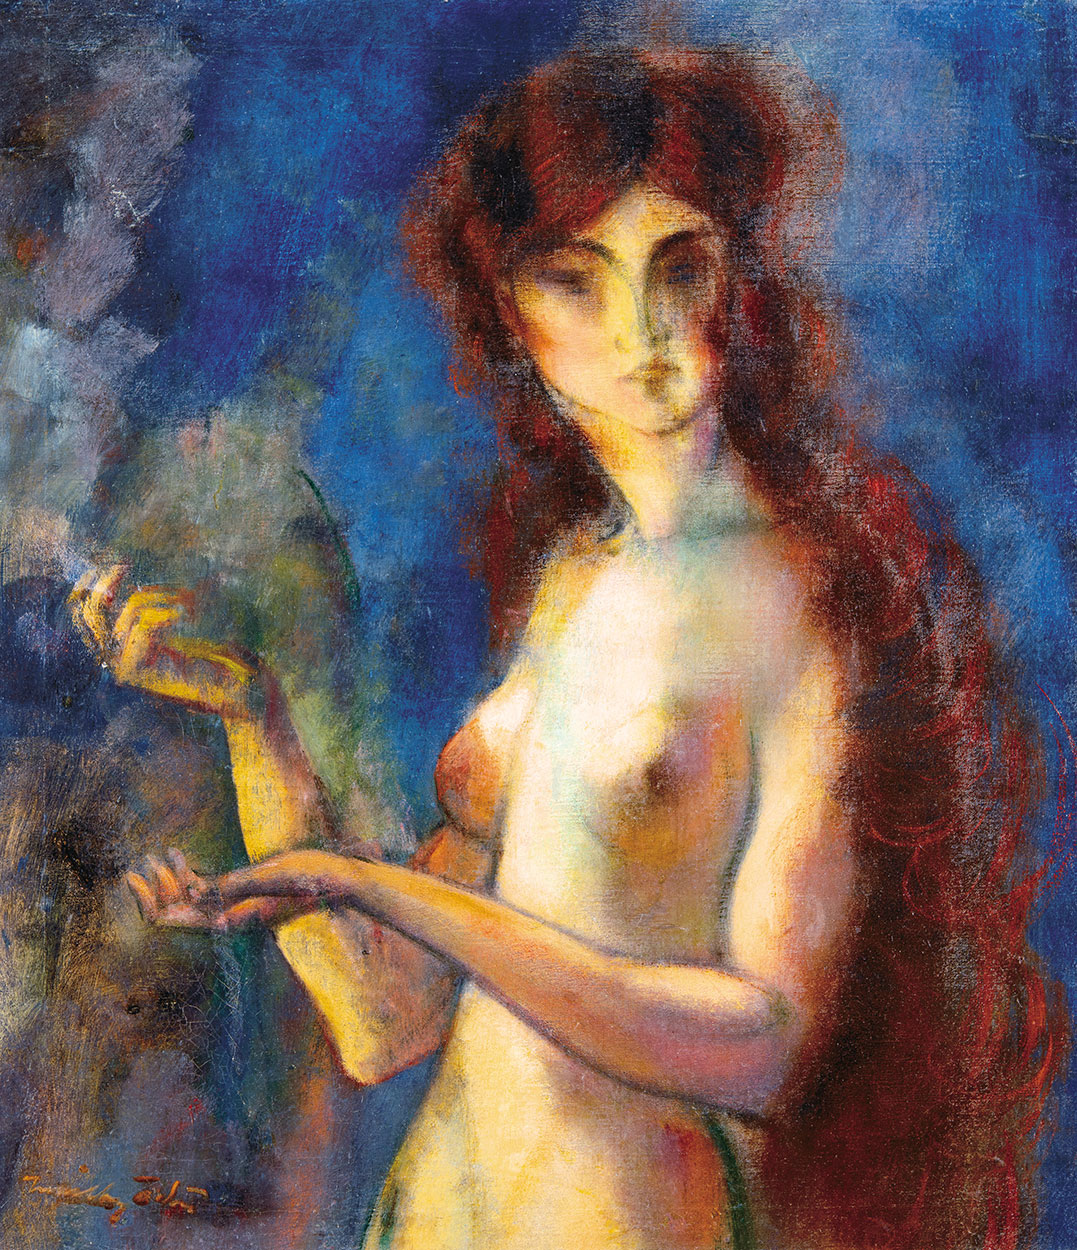 Márffy Ödön (1878-1959) Nude (Pallas Athena, fragment of the paitning: Three Nudes, 1911)